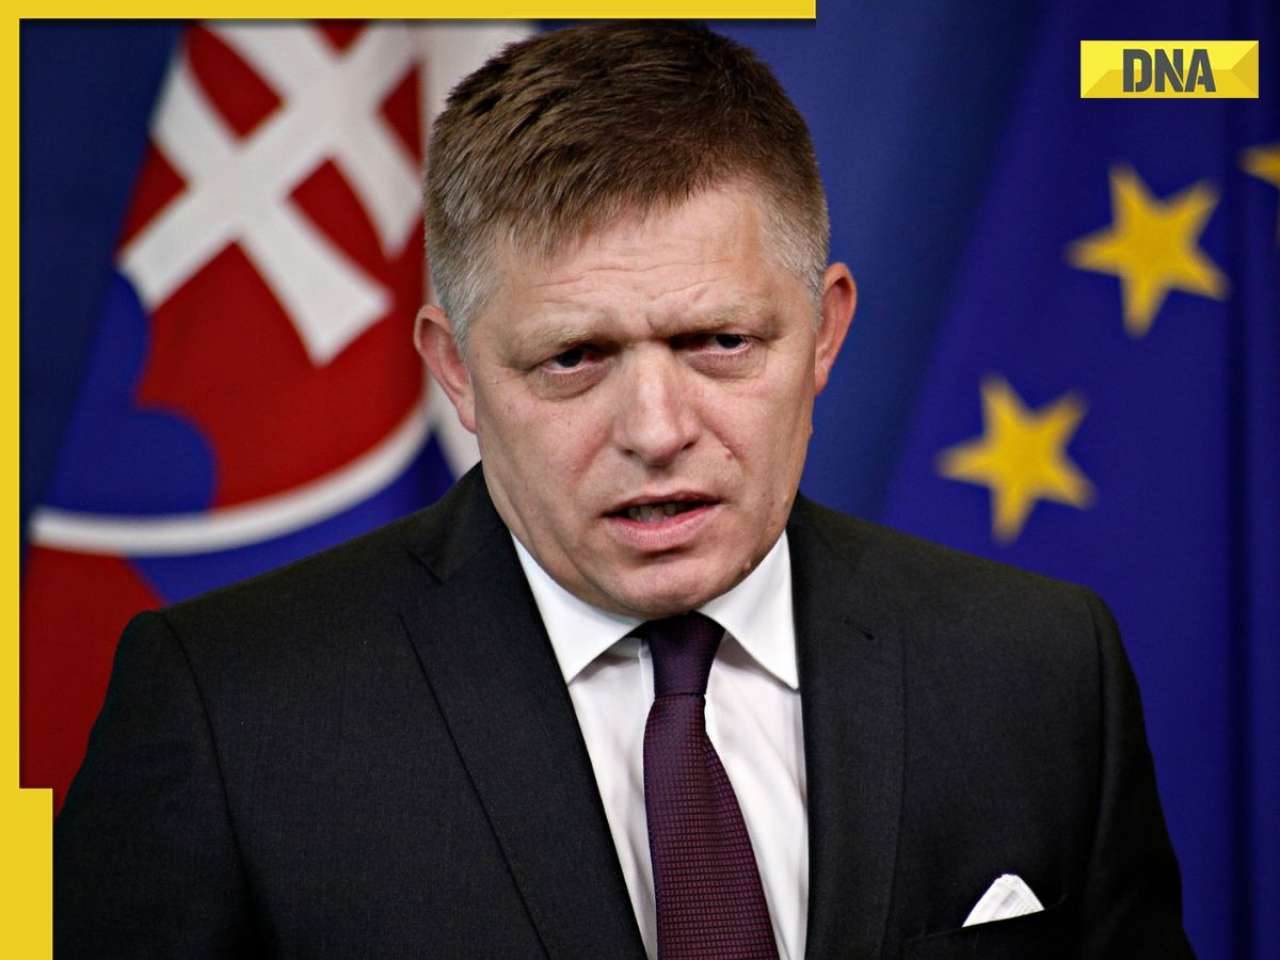 Slovakia Prime Minister Robert Fico injured, taken to hospital 